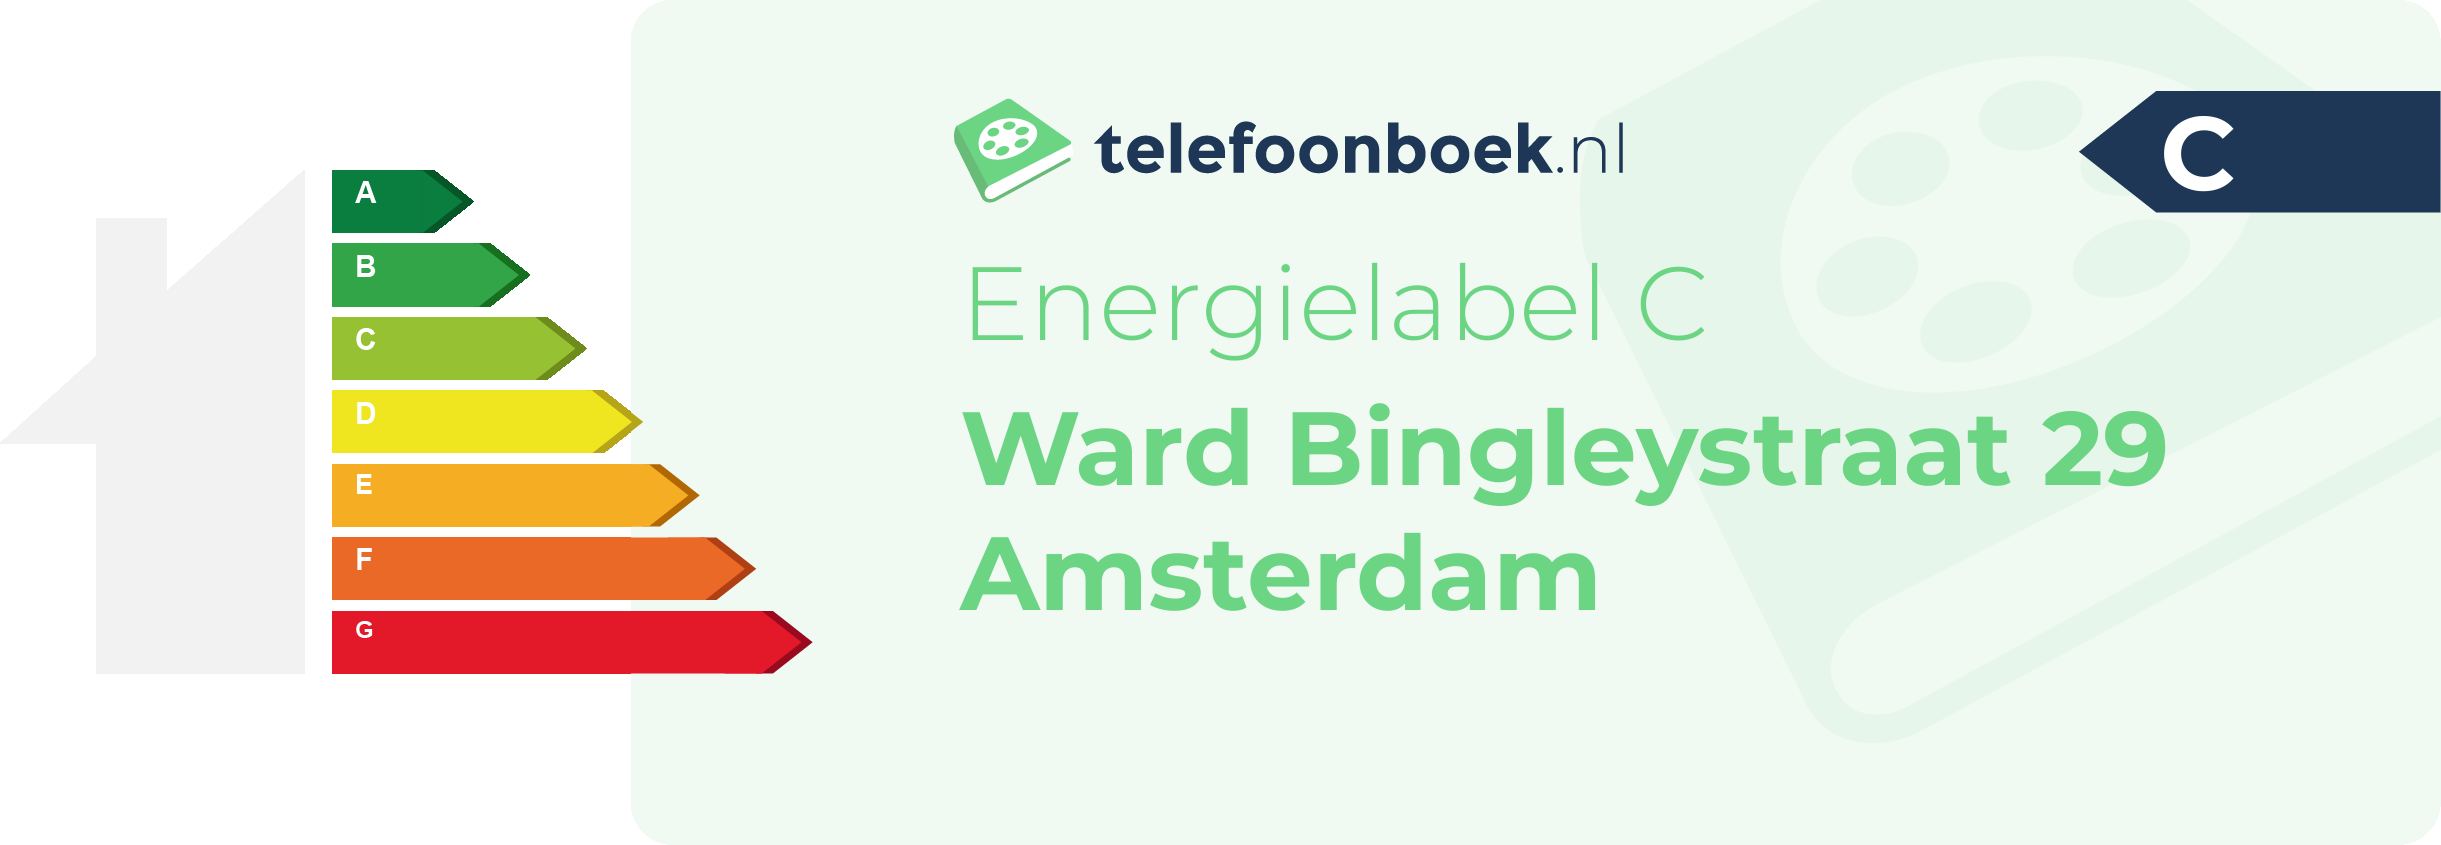 Energielabel Ward Bingleystraat 29 Amsterdam